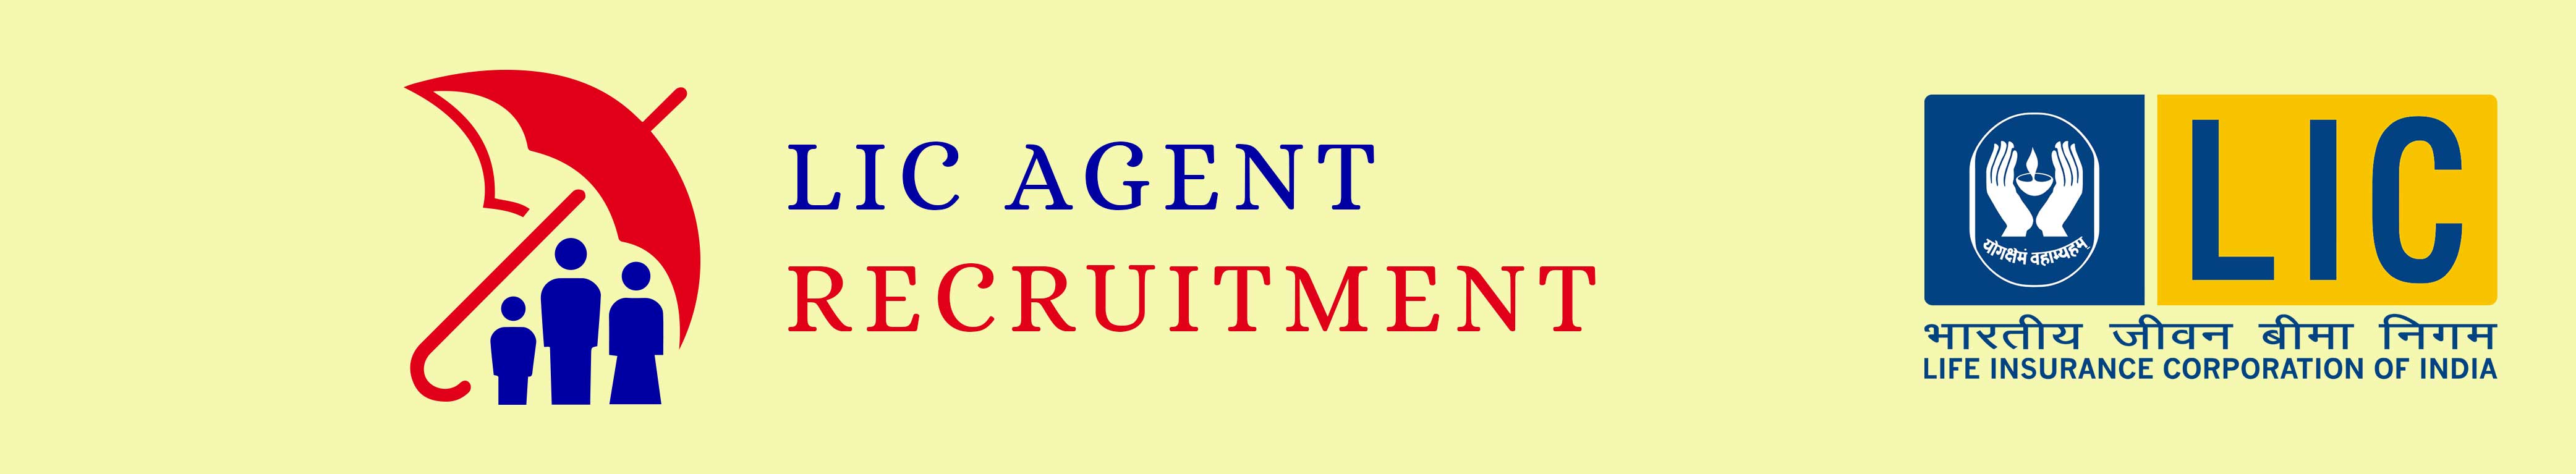 LIC Agent Recruitment Banner Image